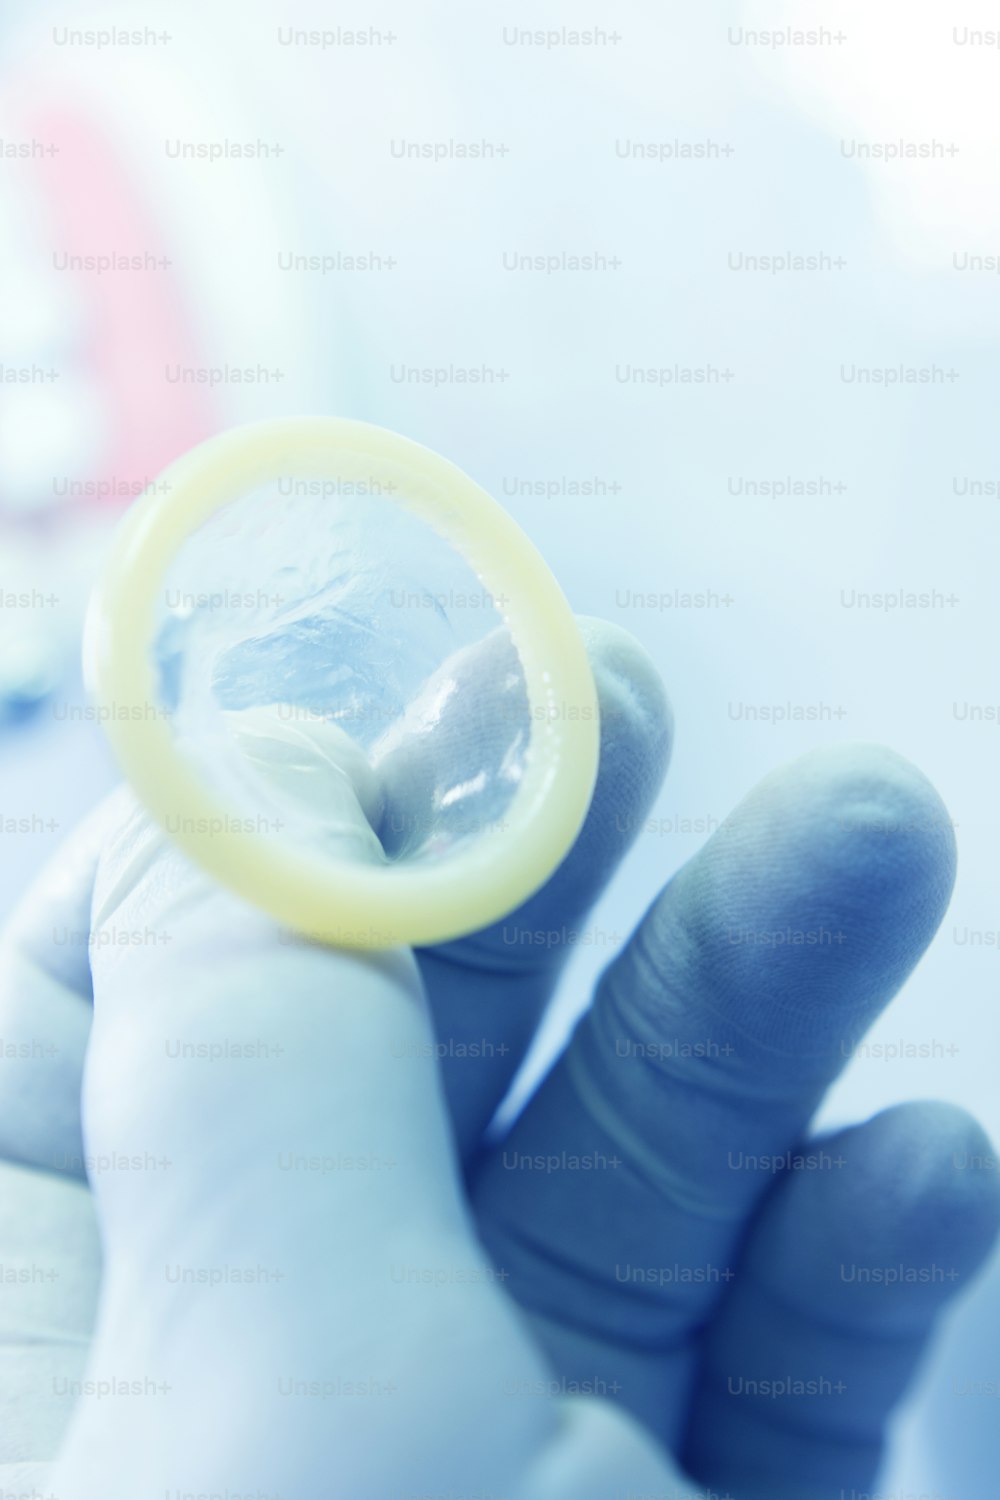 Preservativo de látex de borracha contraceptivo masculino para doenças seguras e sexo livre de gravidez.